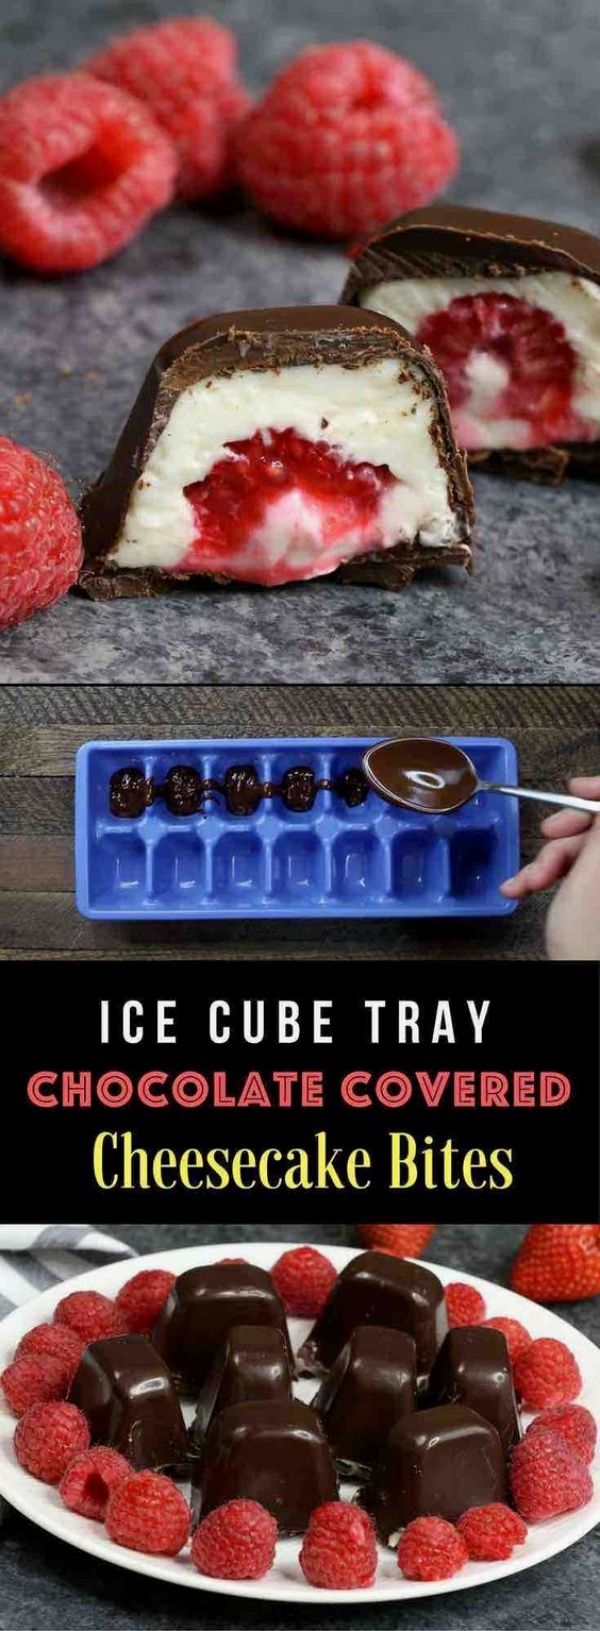 Genius Ways To Use Ice Cube Trays